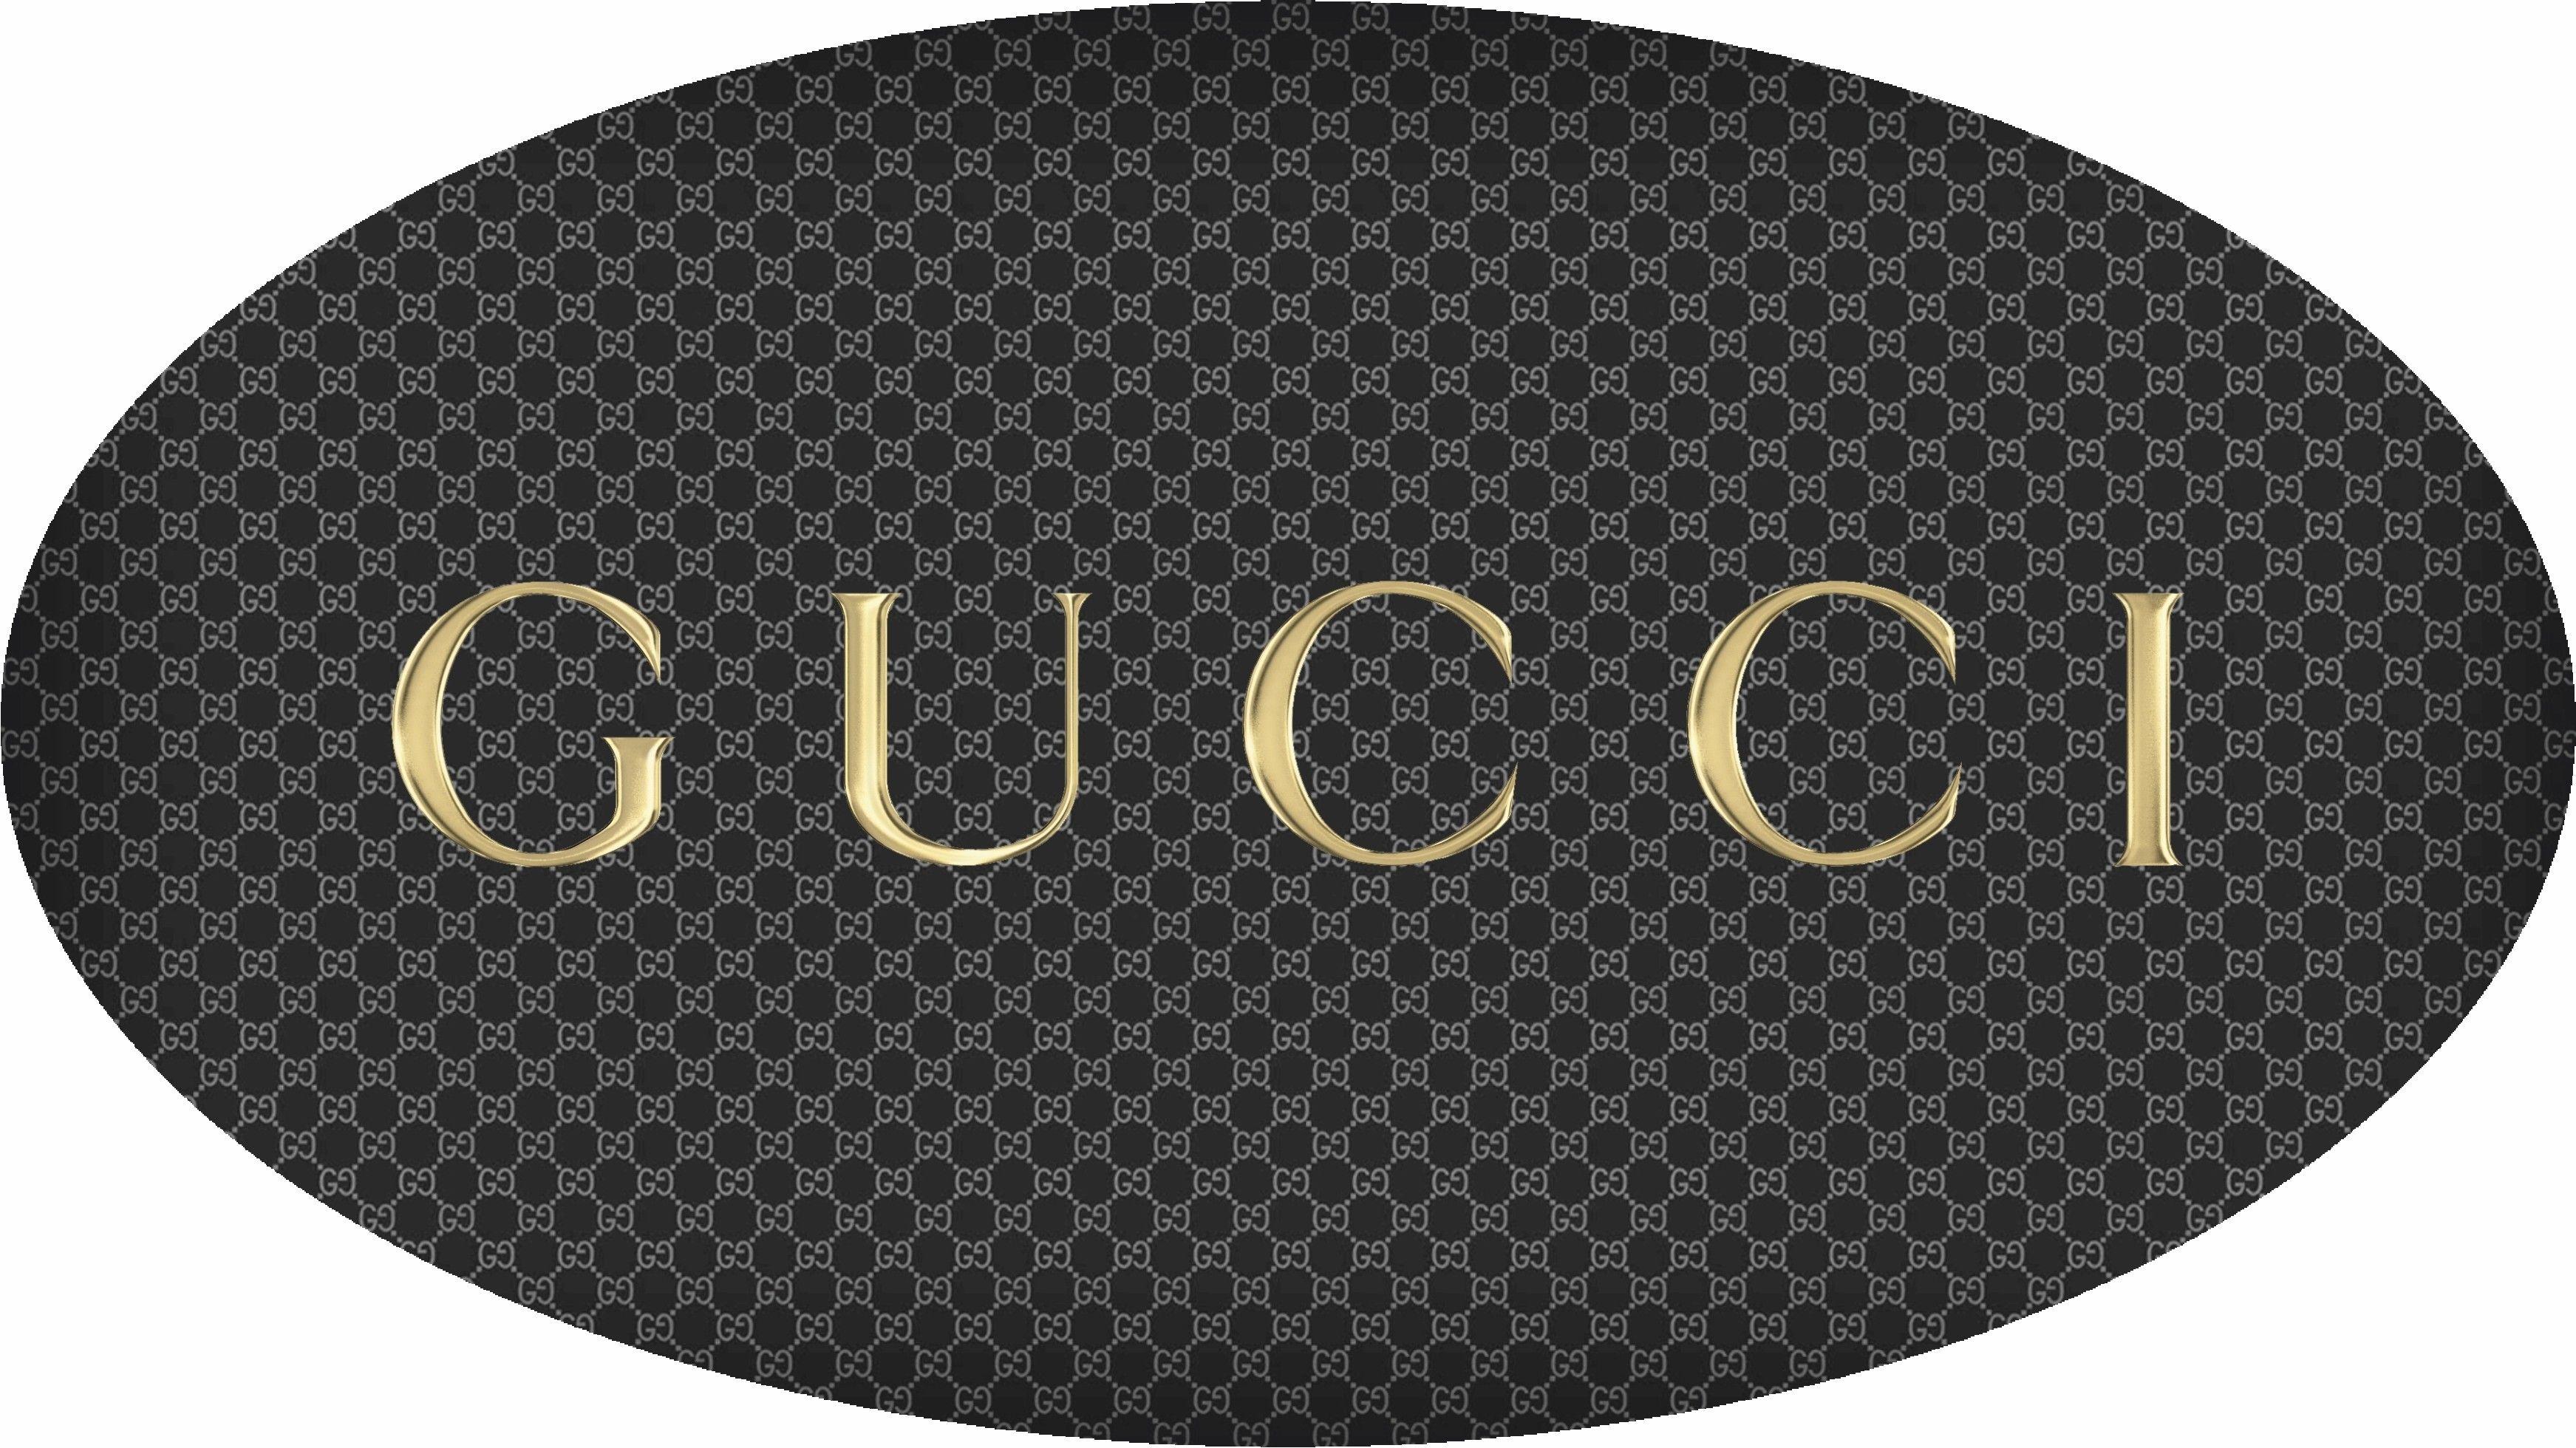 Gucci. Gucci Marke Logo Desktop Wallpaper and Background